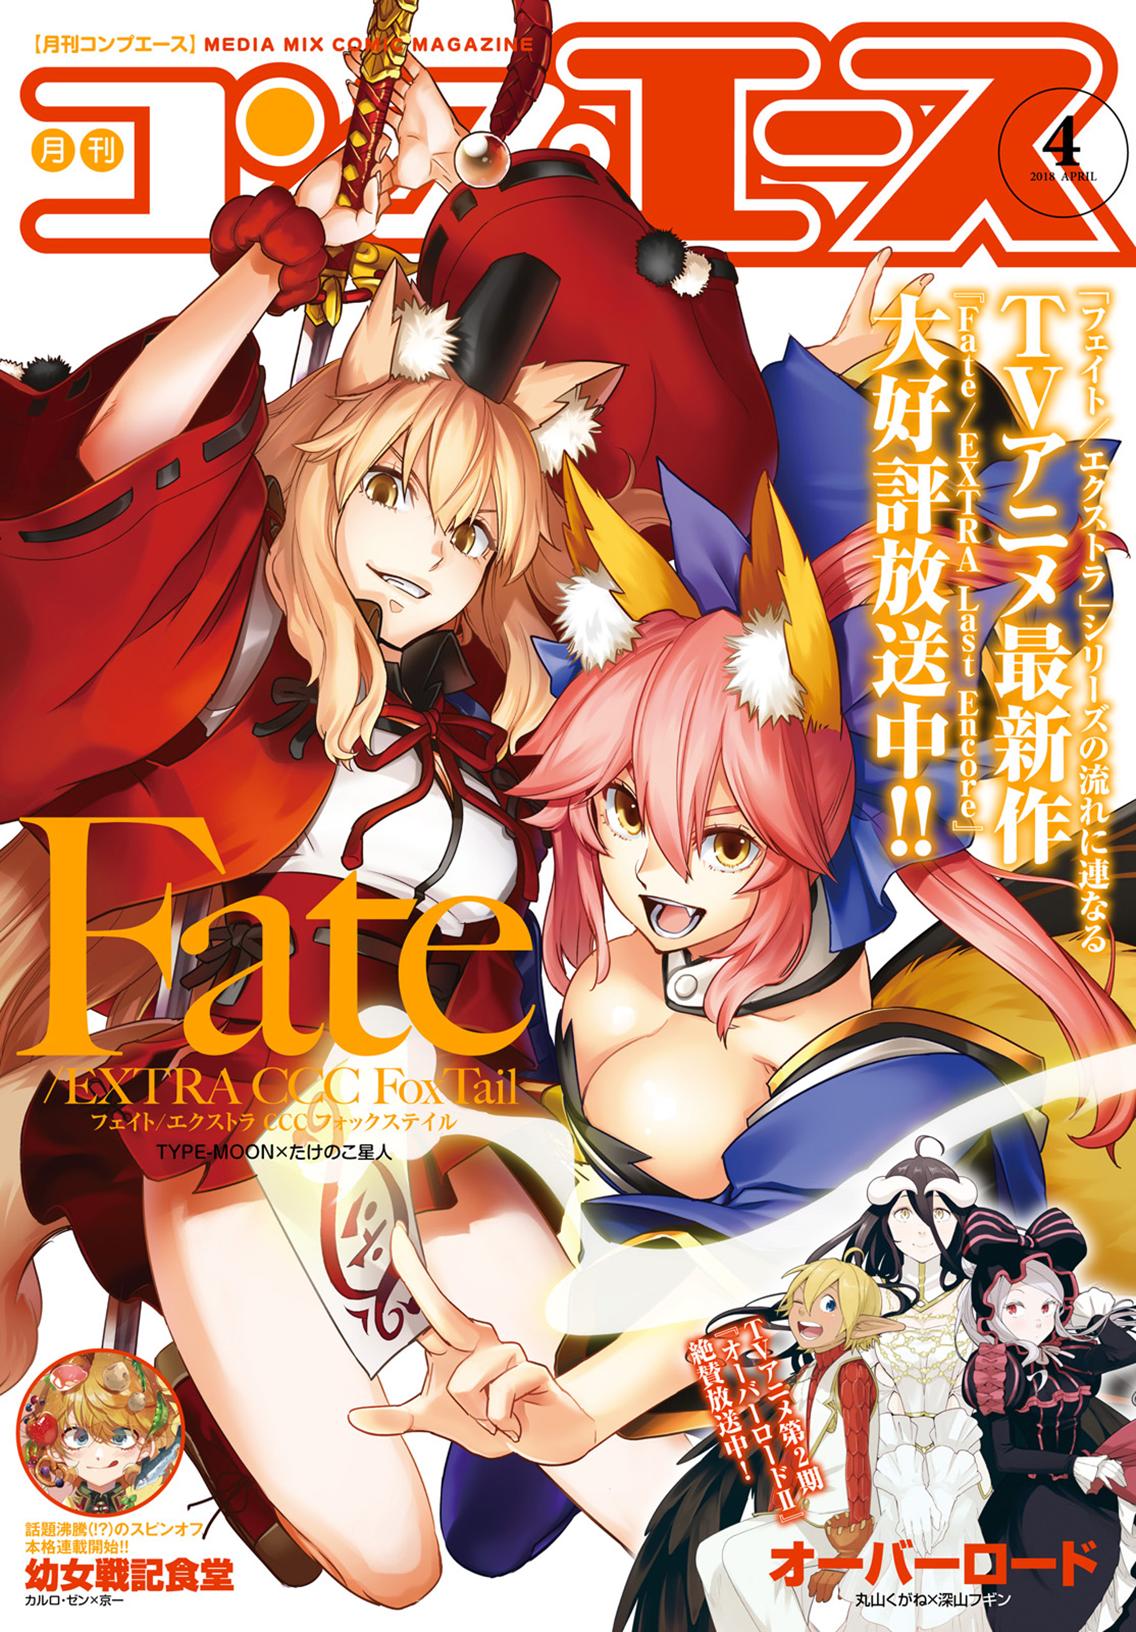 Fate Extra Ccc Foxtail Chapter 45 Replica 1 Mangakakalots Com